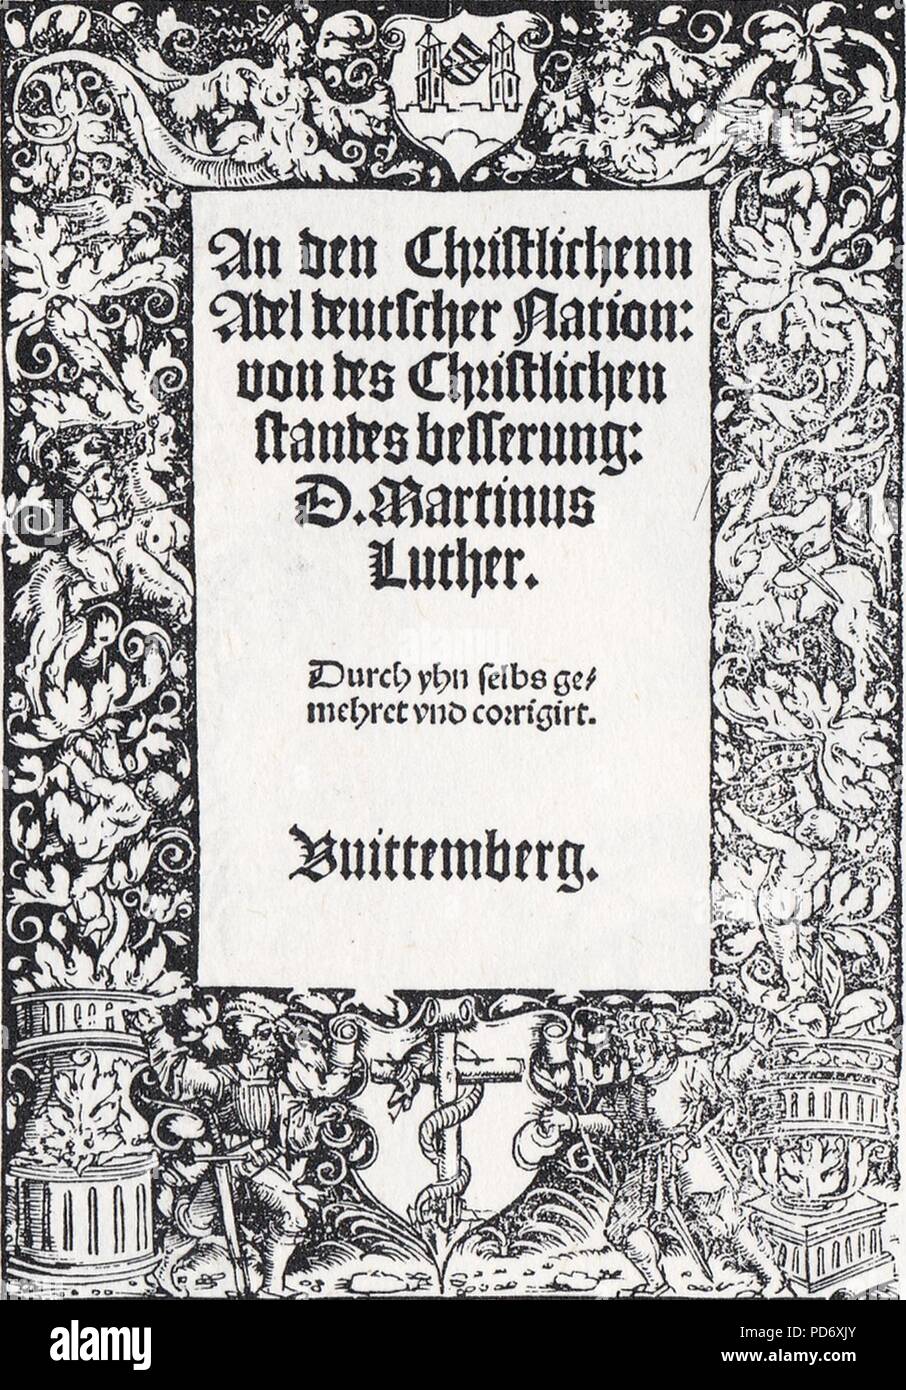 Un den Christlichenn Adel 1520. Foto Stock